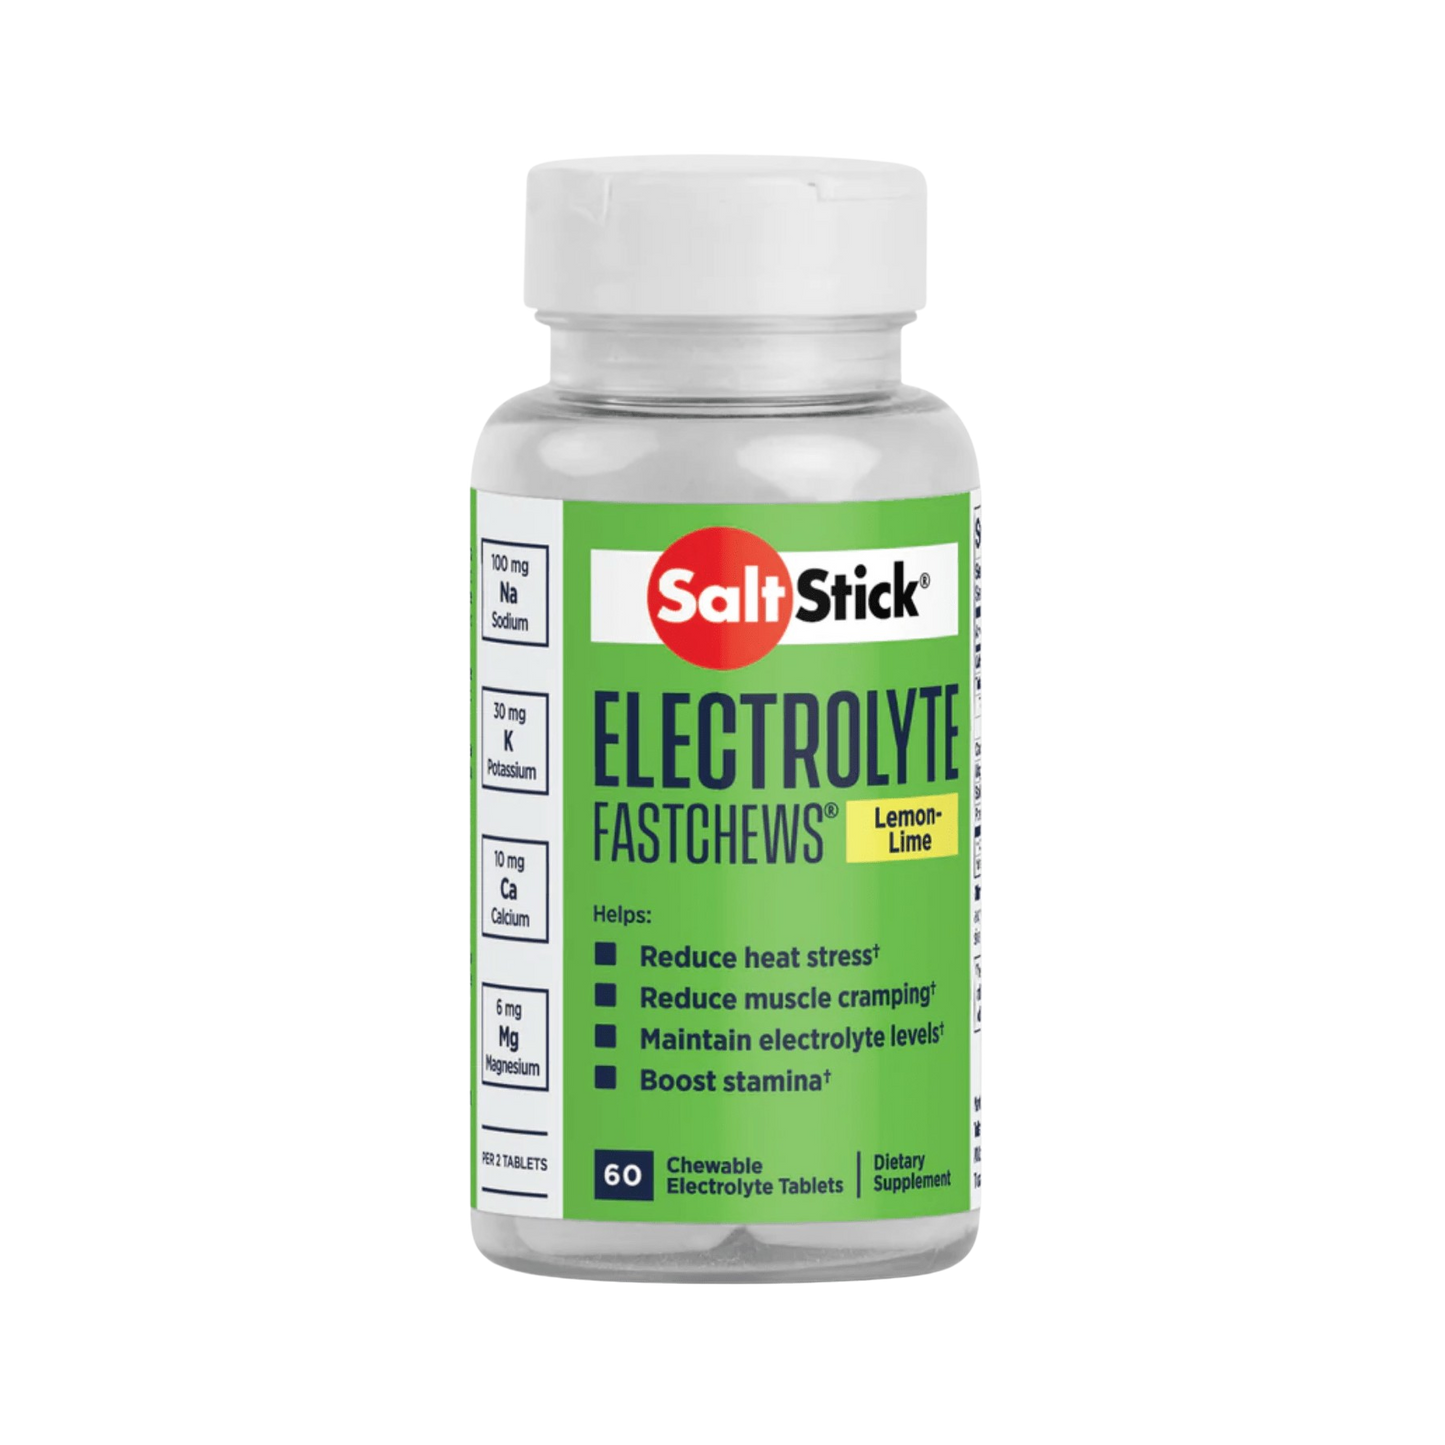 SaltStick Electrolyte FastChews Lemon-Lime